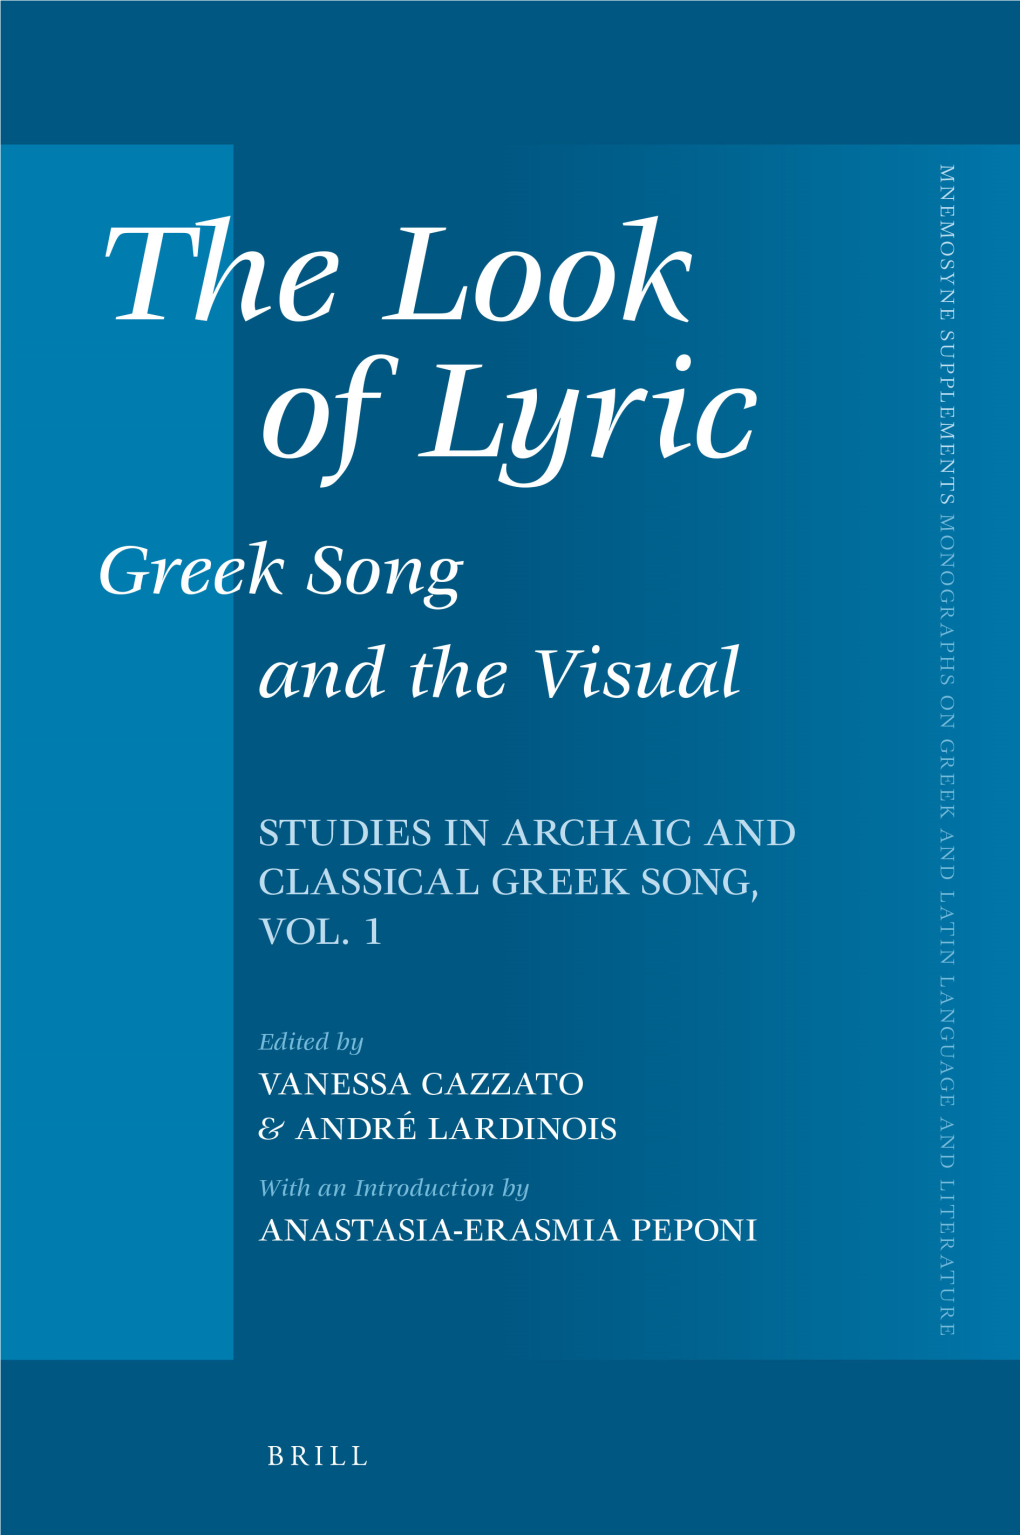 Lyric Vision: an Introduction 1 Anastasia-Erasmia Peponi